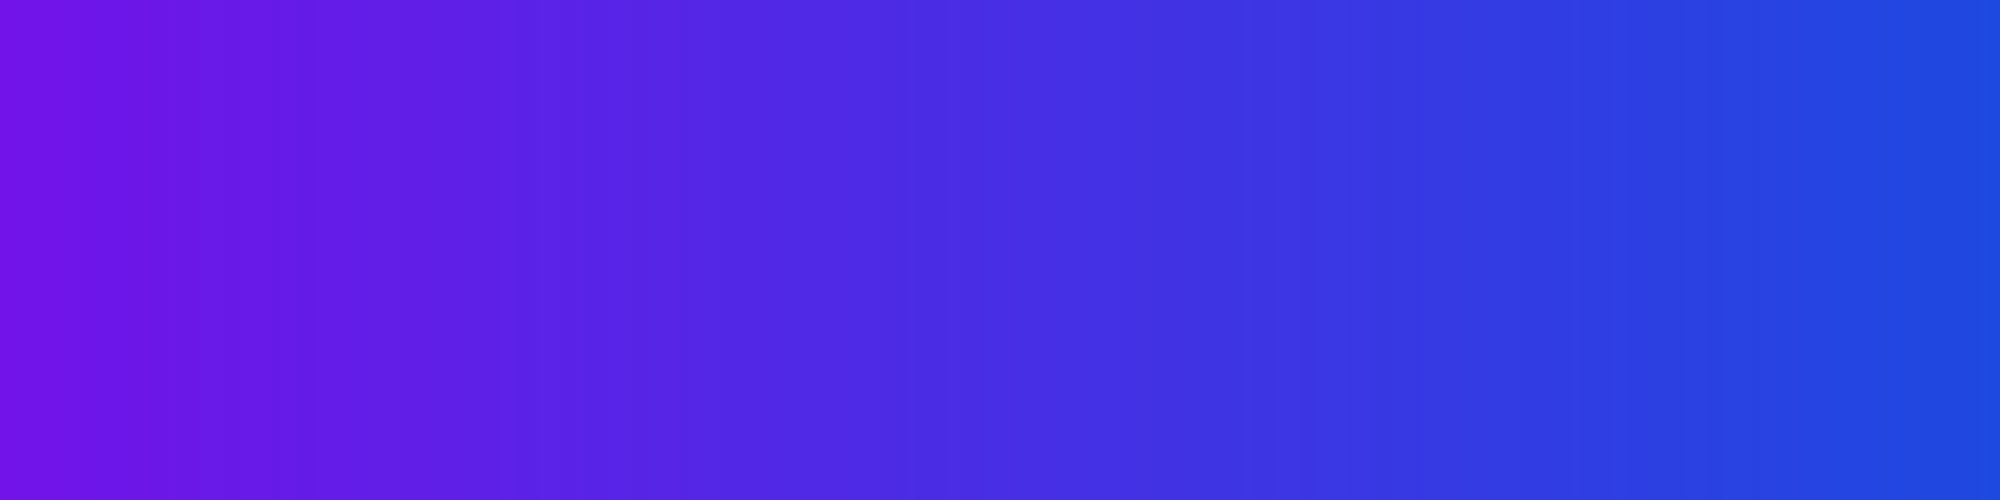 KPMG purple blue gradient